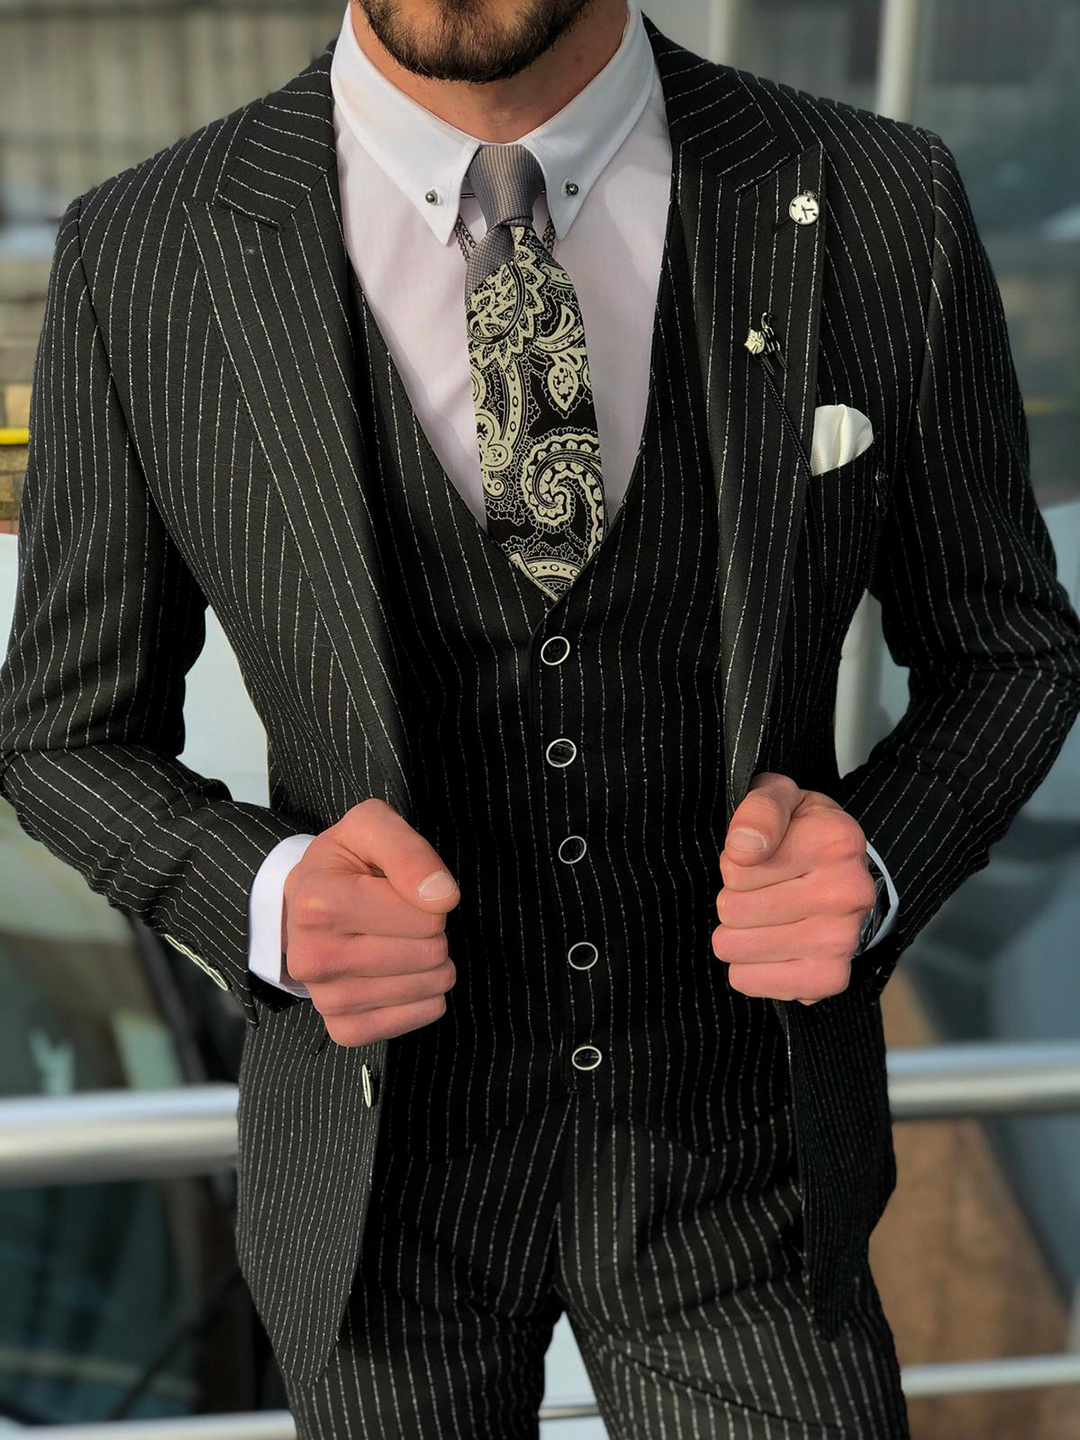 black three-piece pinstripe suit with a paisley tie